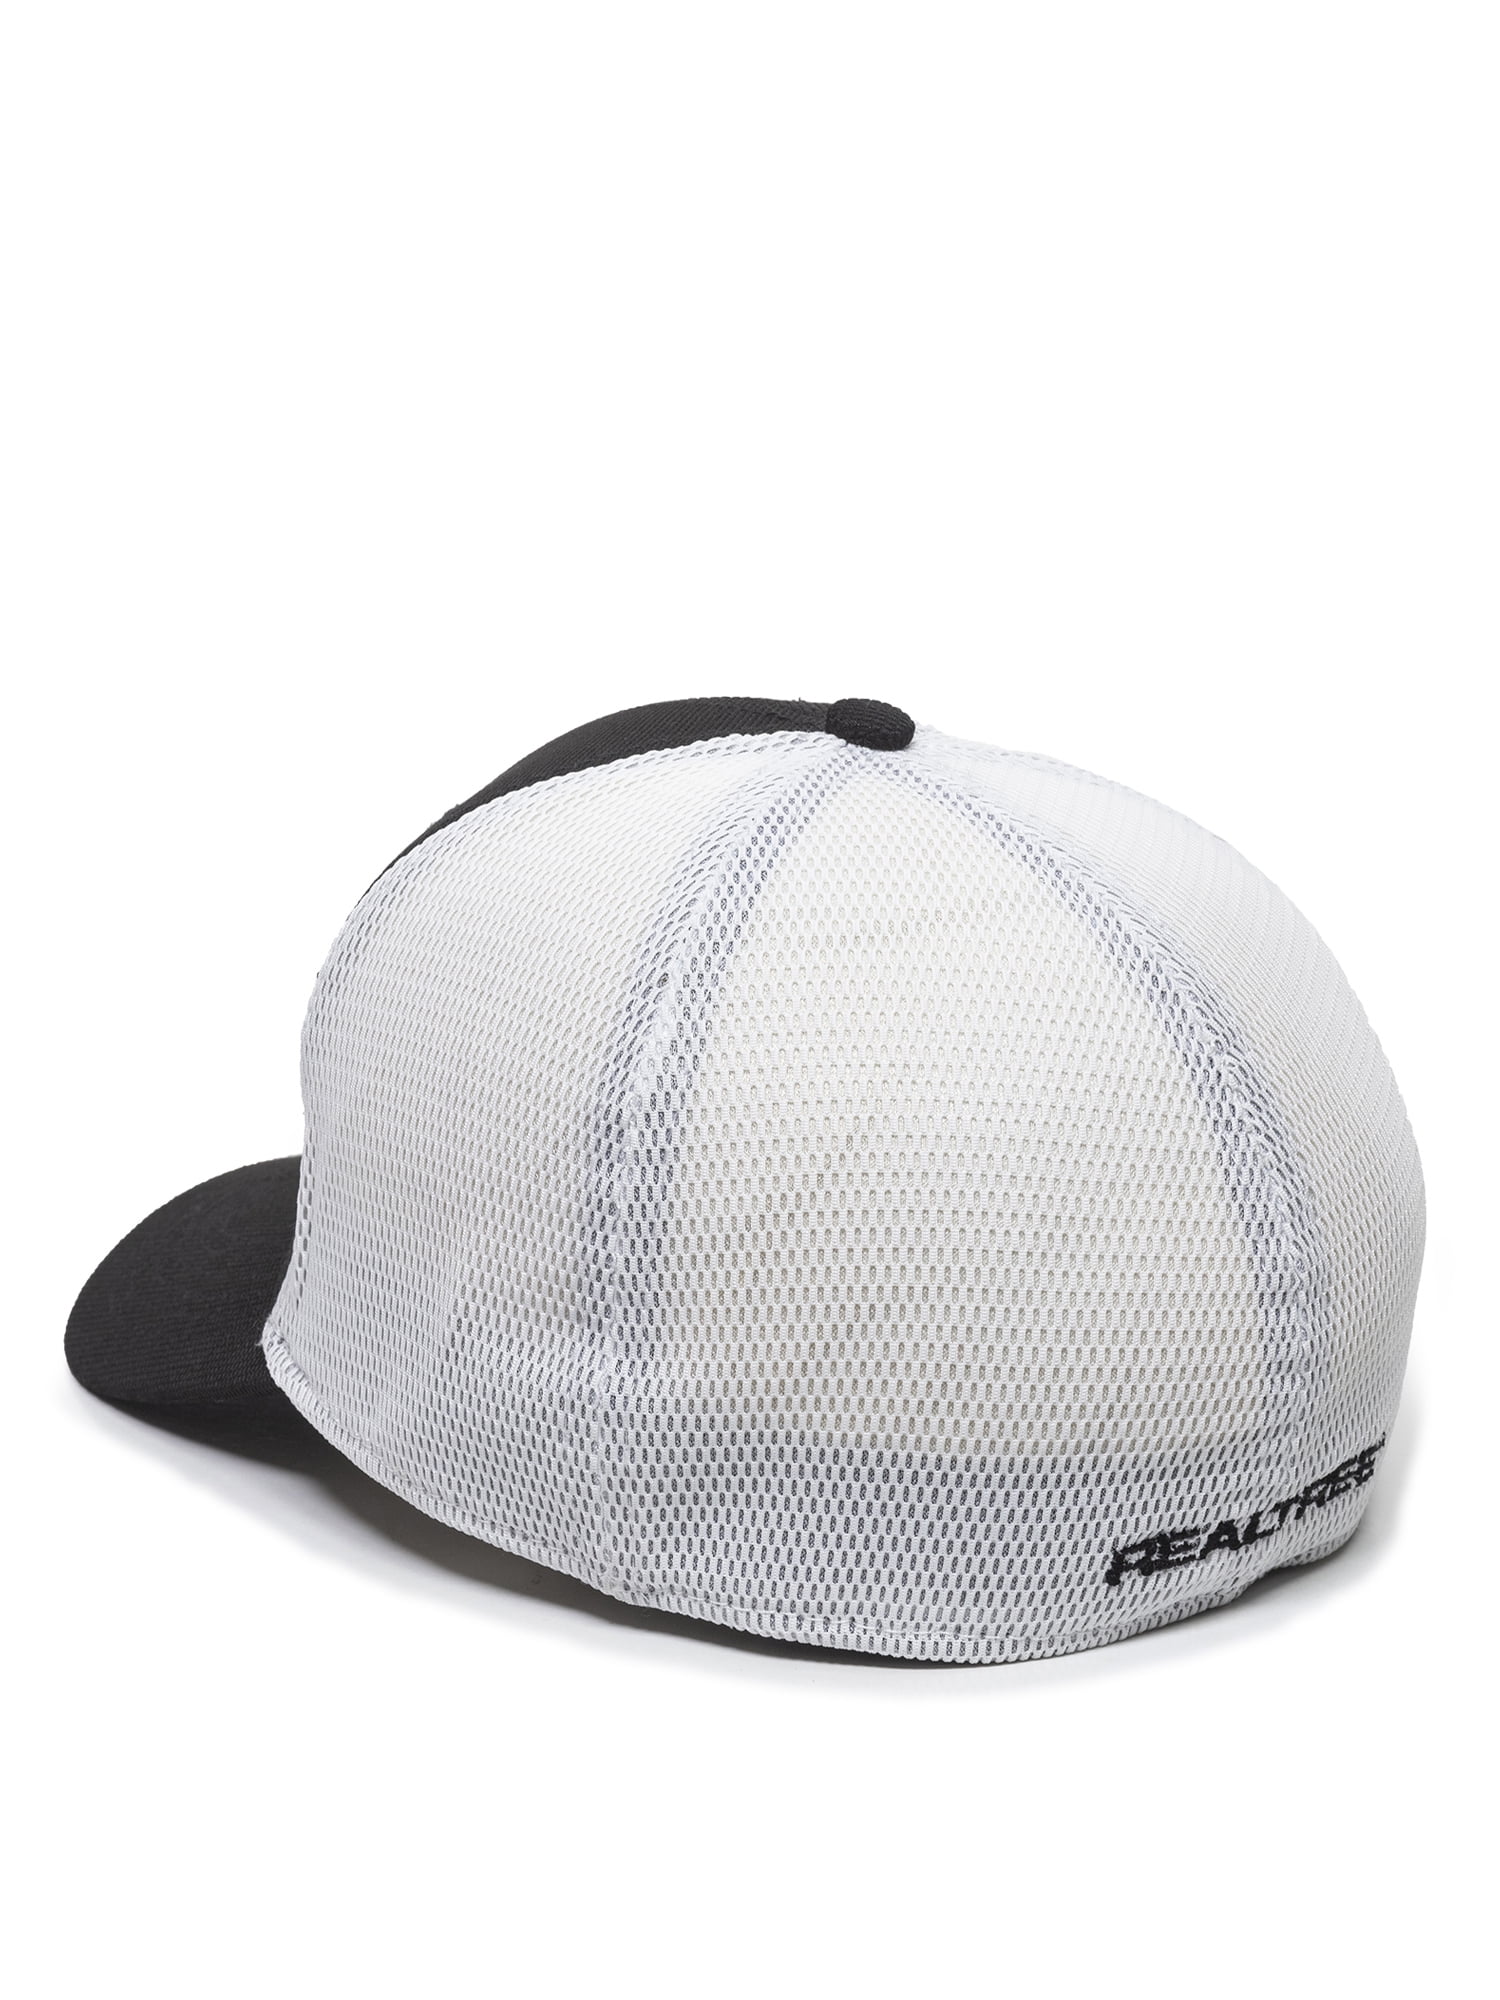 Baseball Large Large/Extra Hunting Hat, Realtree Black/White, Structured Style